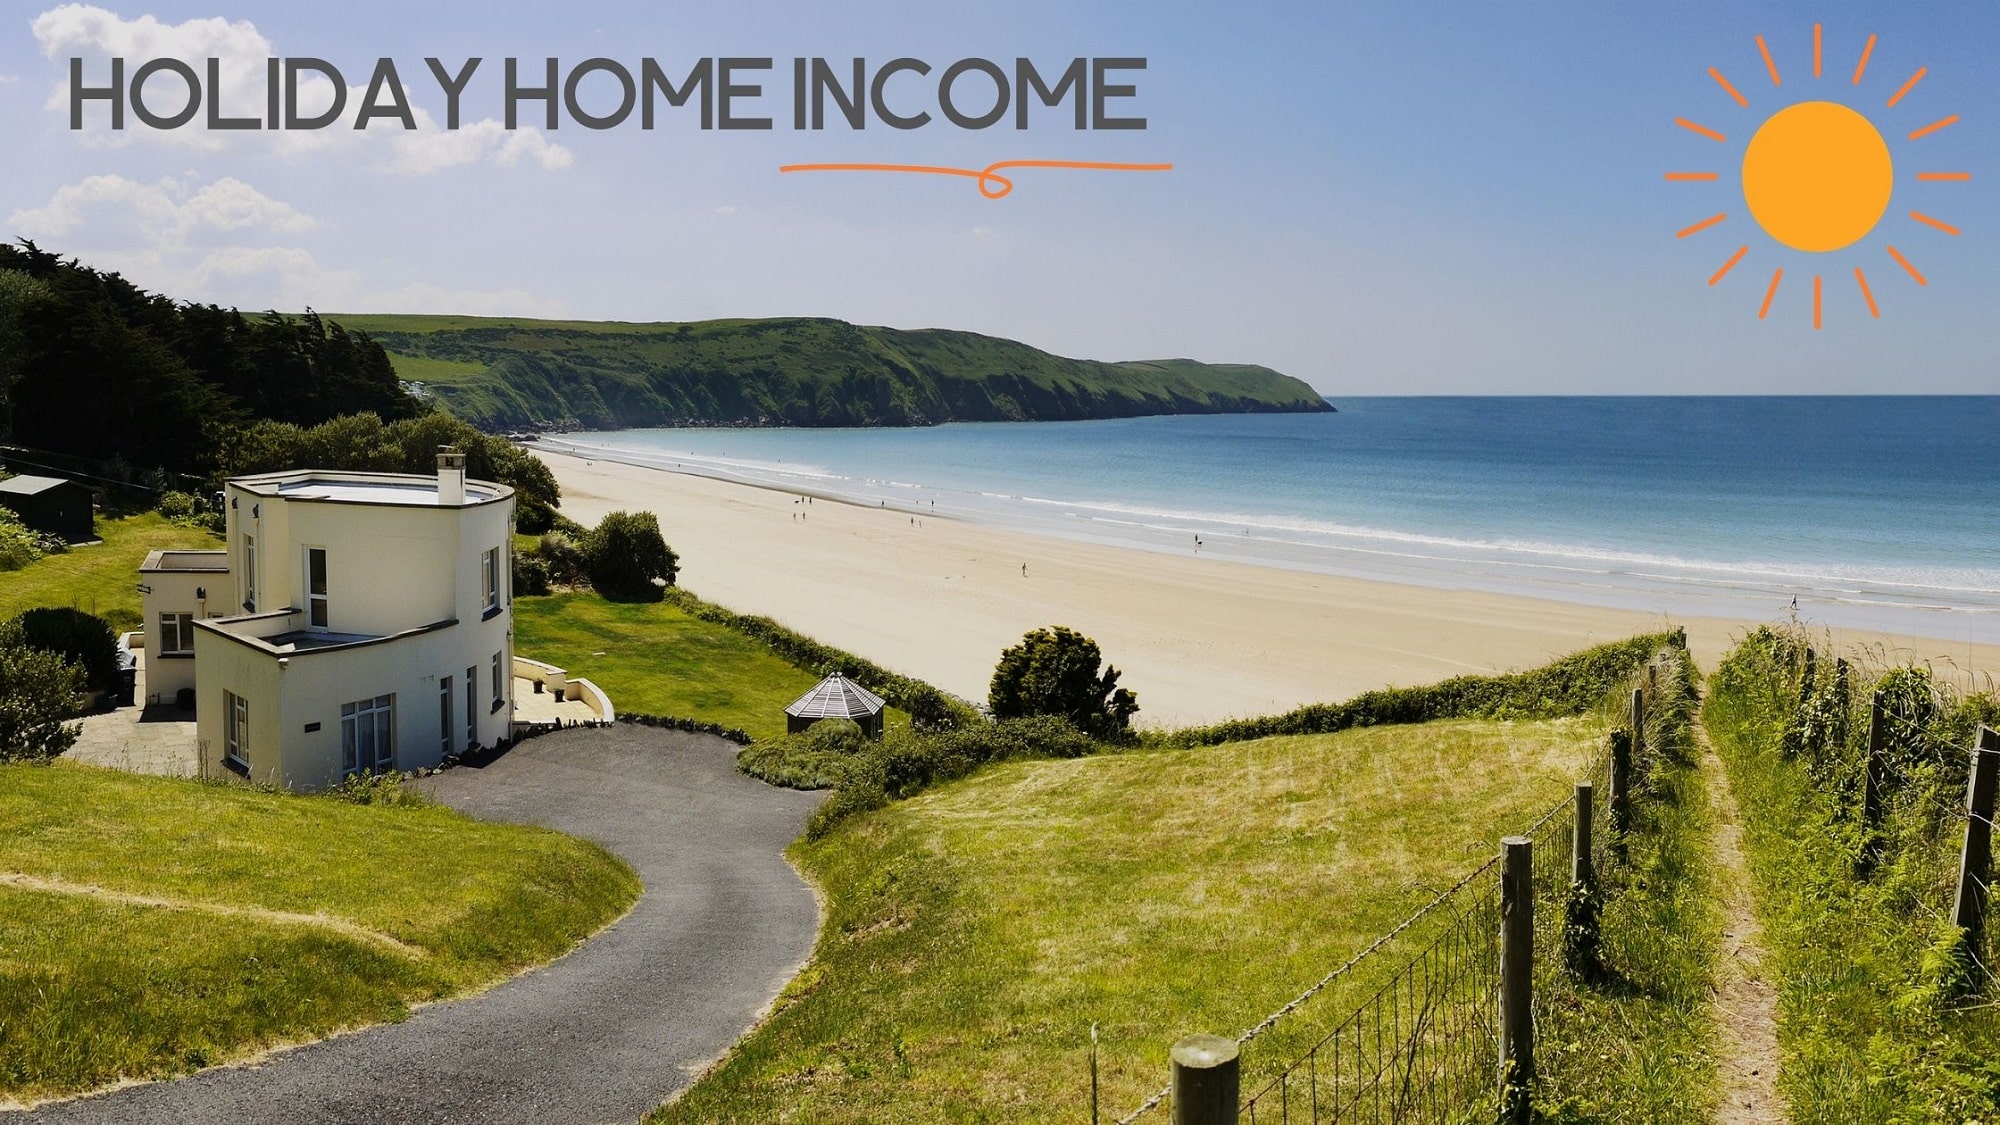 holiday home income